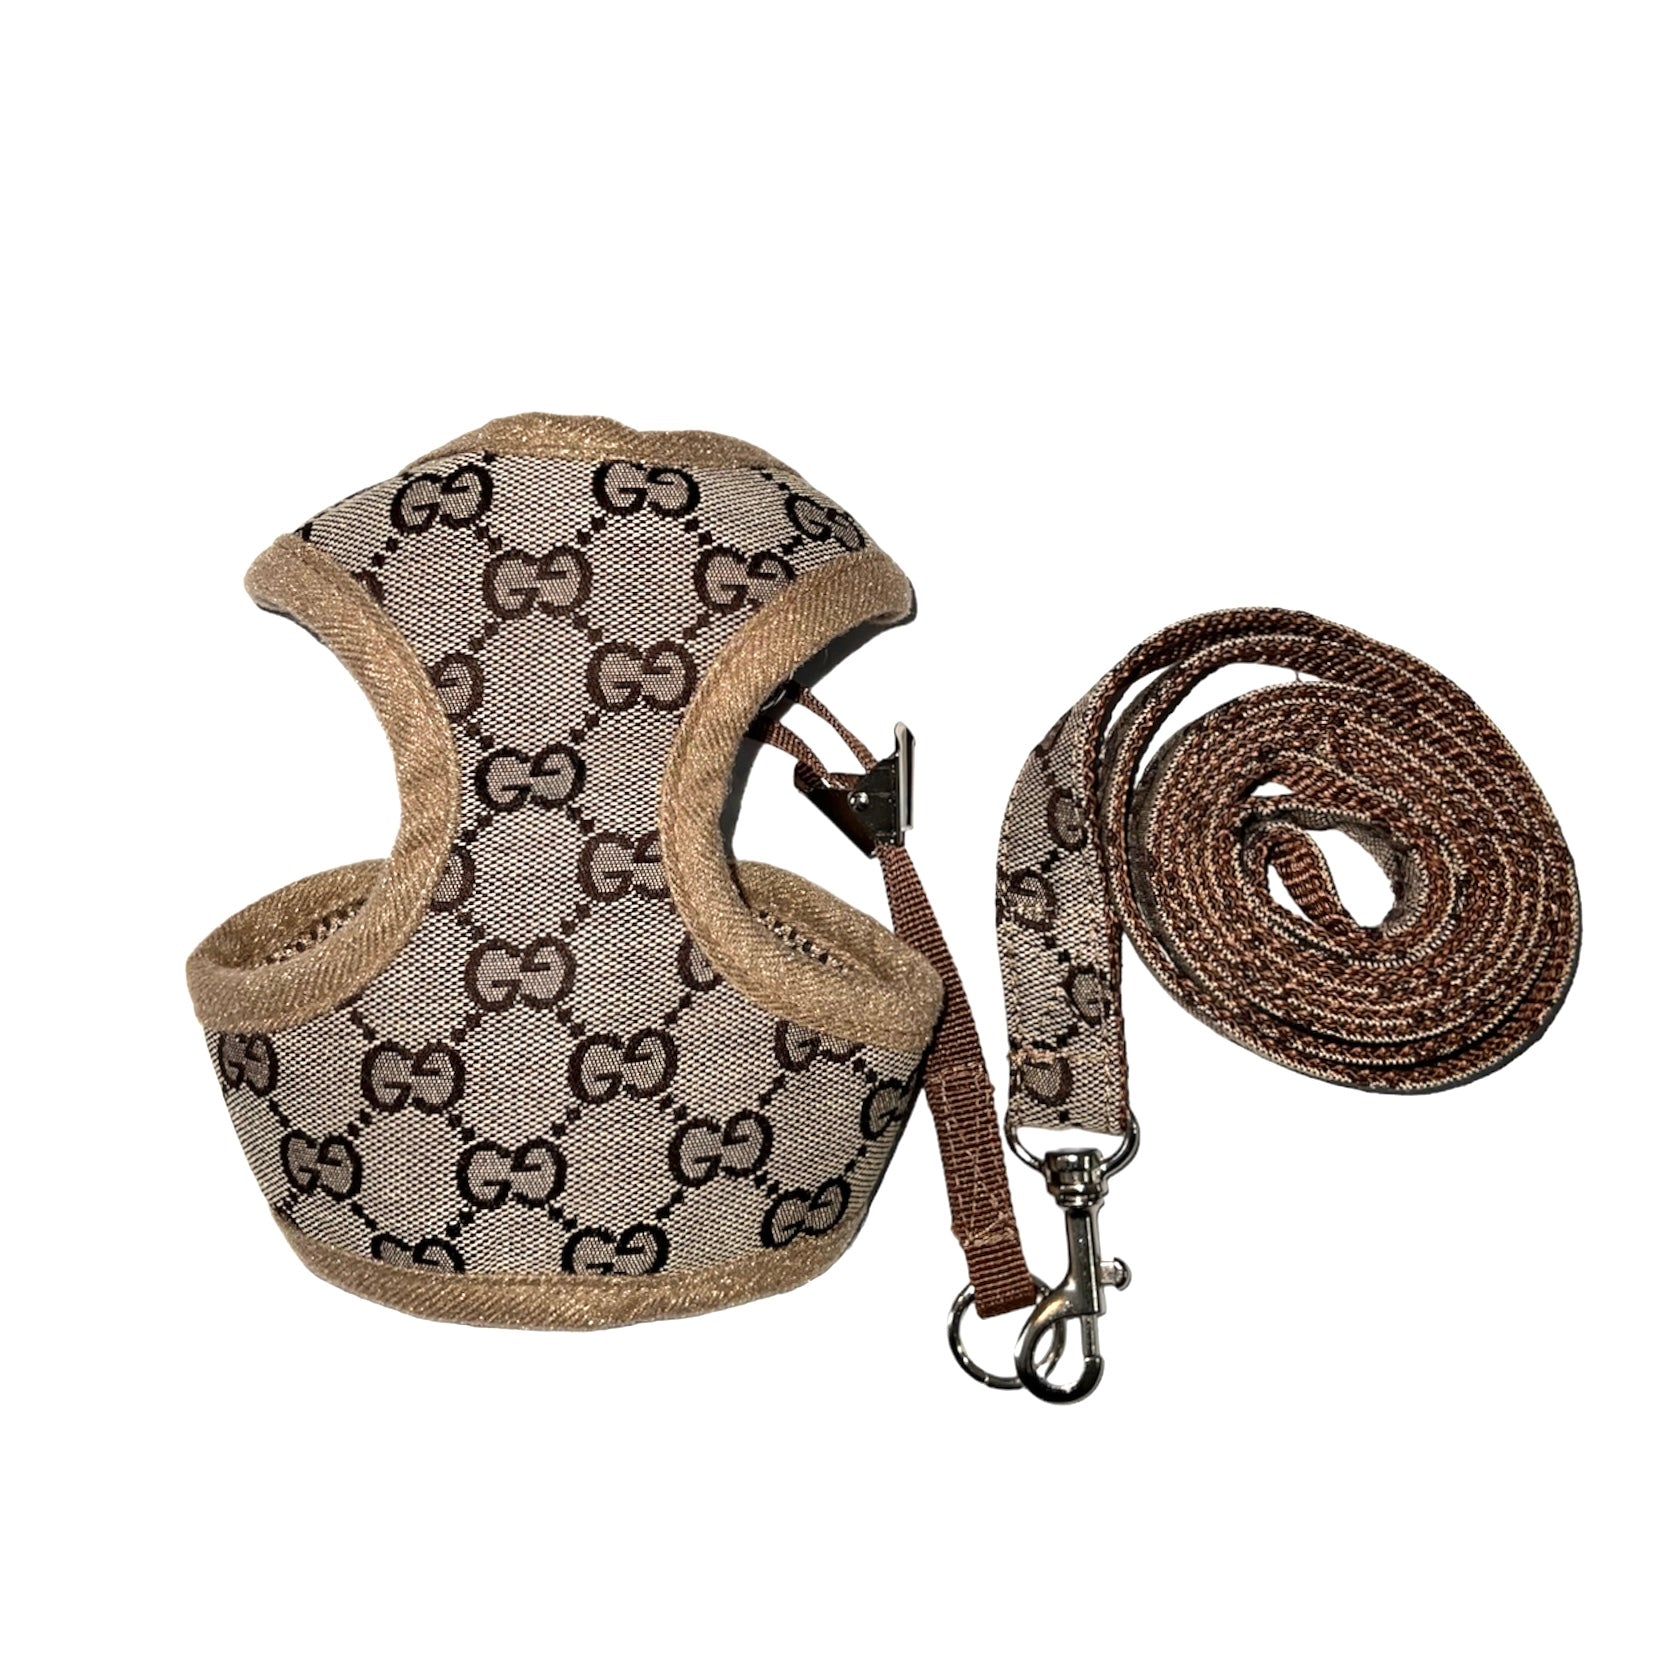 Pawcci Hero Classic Designer Dog Harness and Leash Set